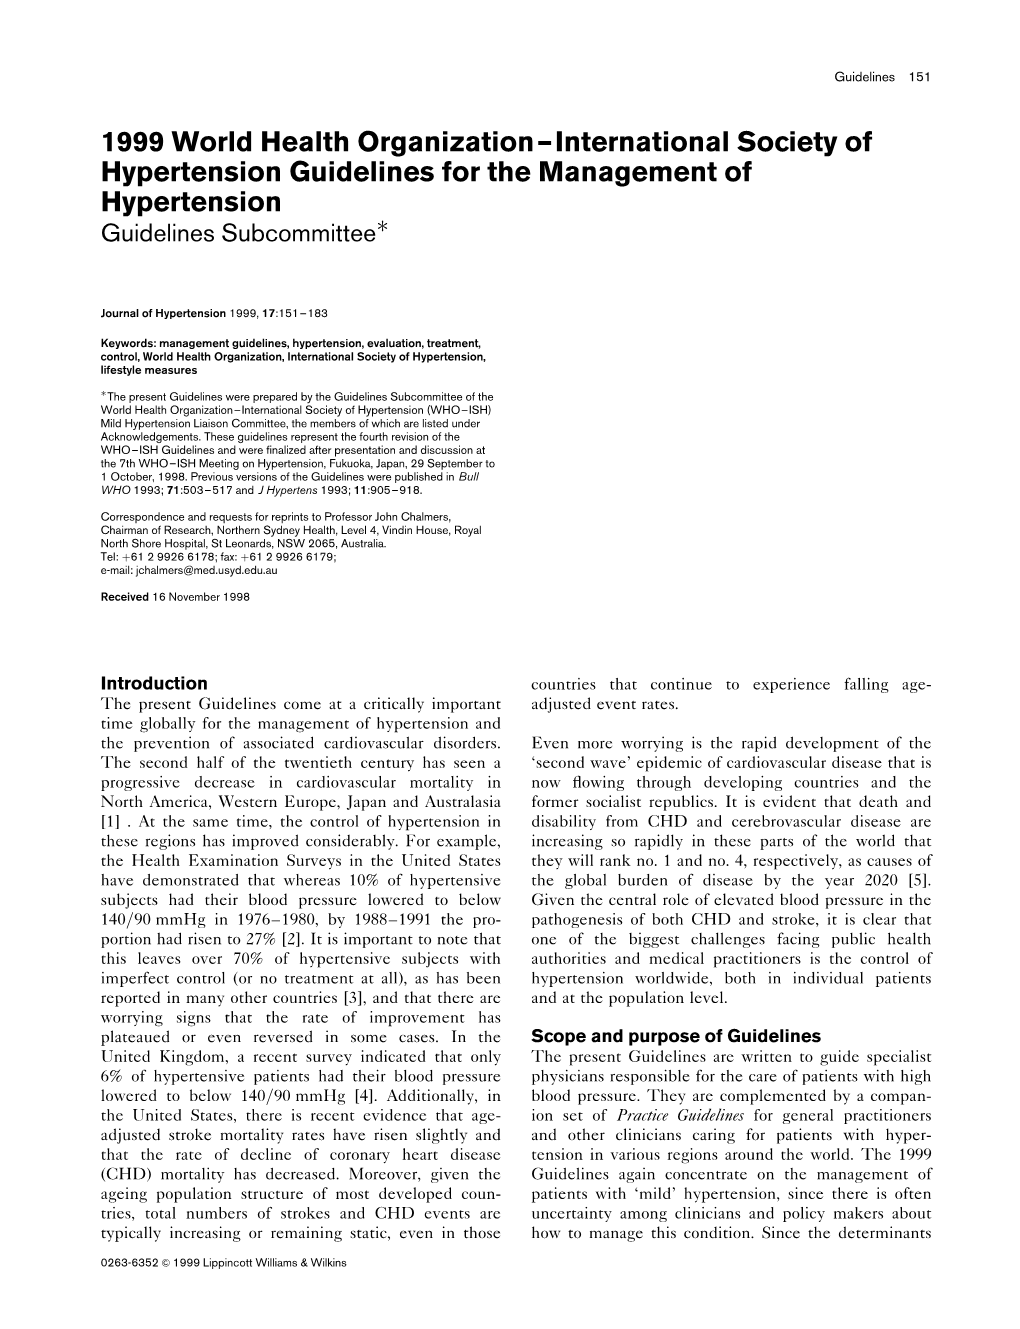 1999 World Health Organization-International Society of Hypertension Guidelines for the Management of Hypertension